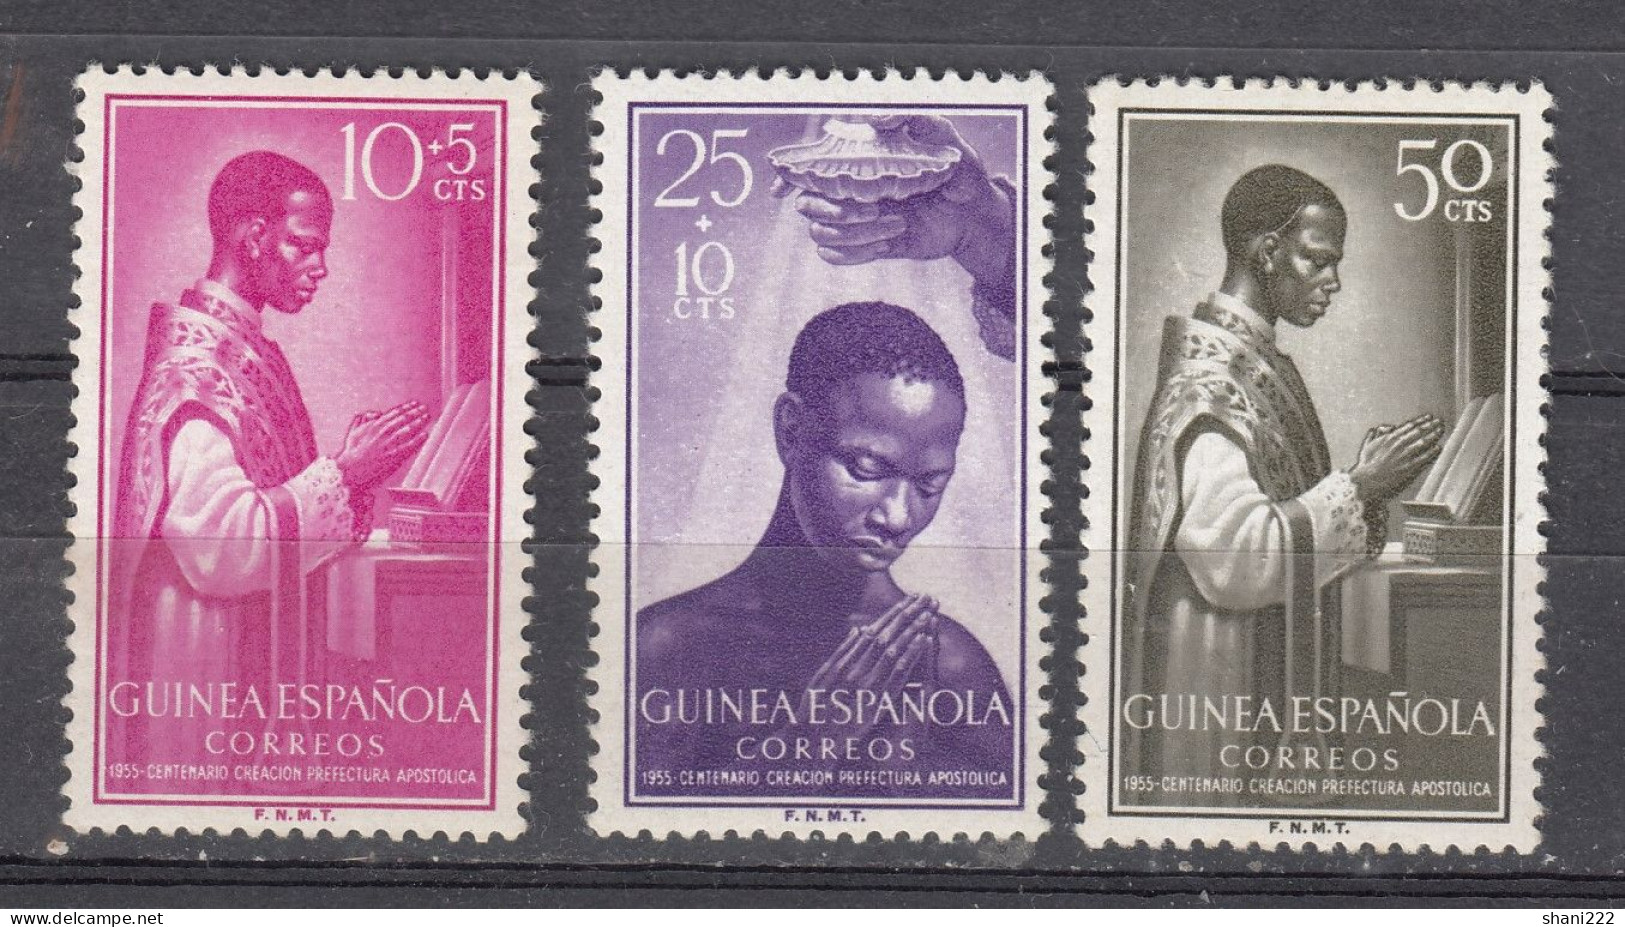 Spanish Guinea - 1955 Prefectura Apostolica - MNH (e-812) - Guinea Spagnola